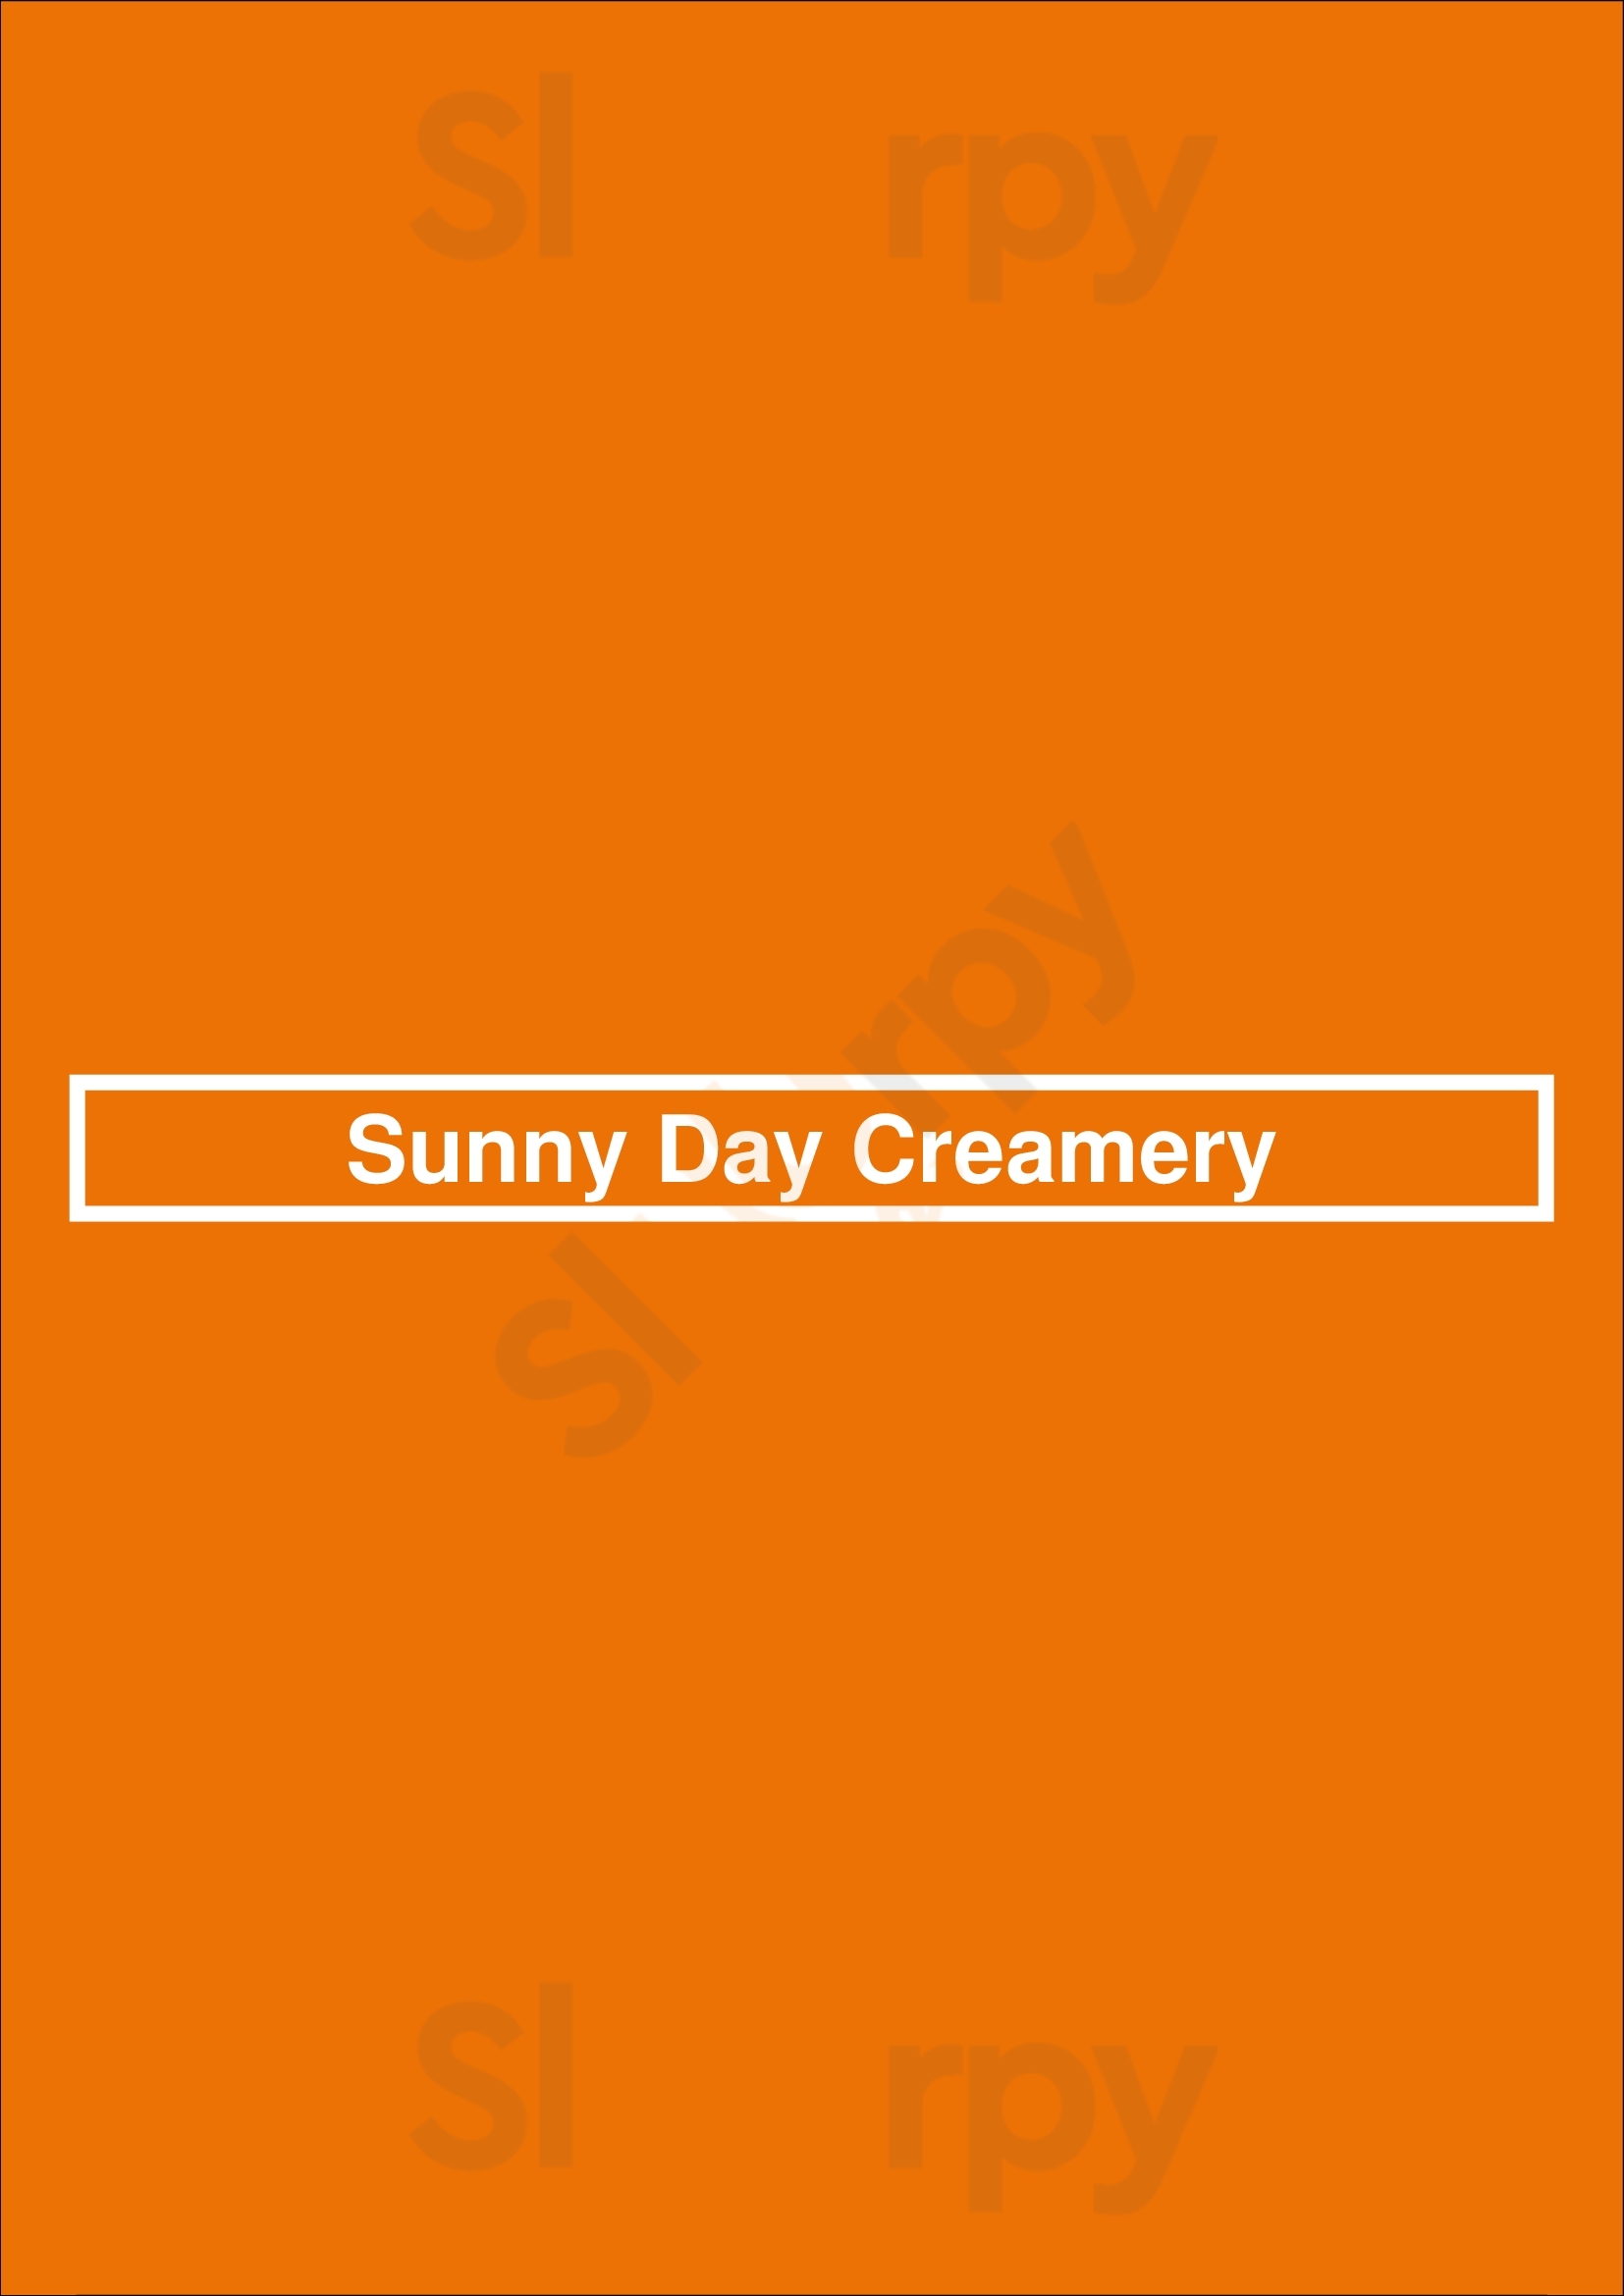 Sunny Day Creamery Los Angeles Menu - 1